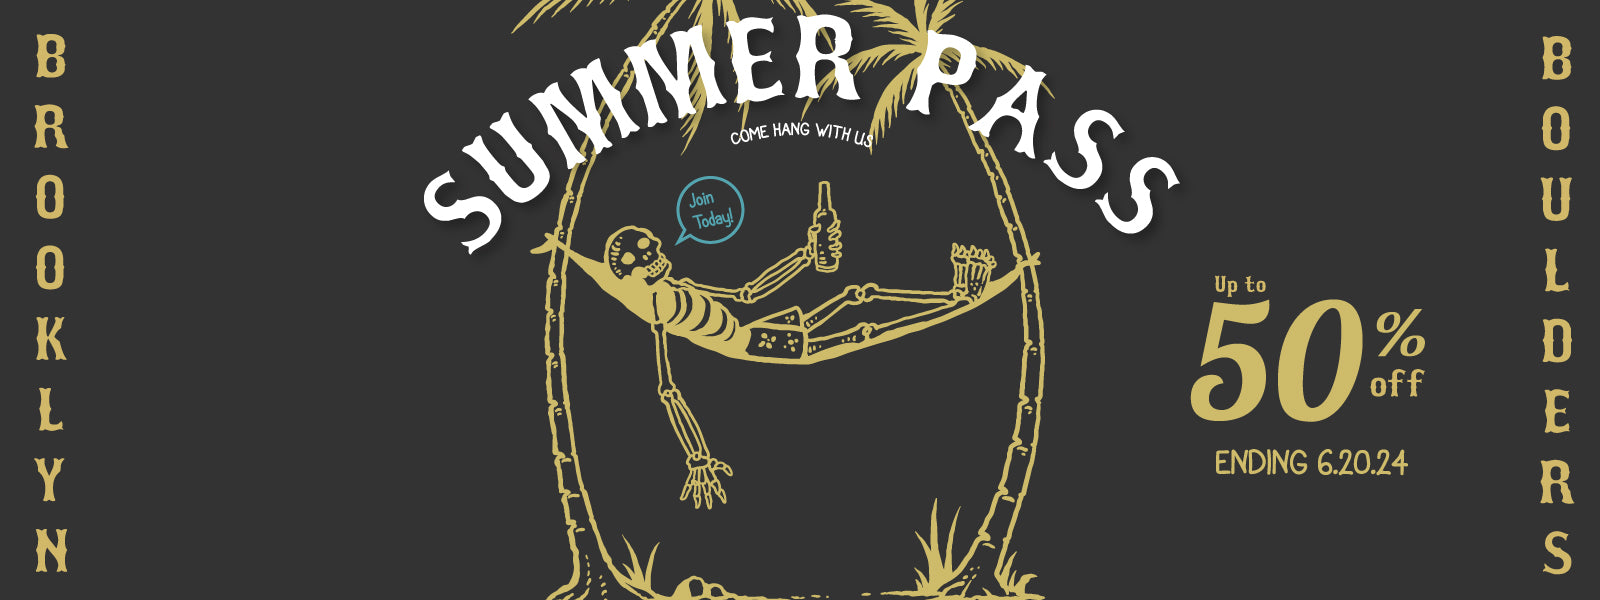 Summer Pass Banner Graphic, Brooklyn Boulders